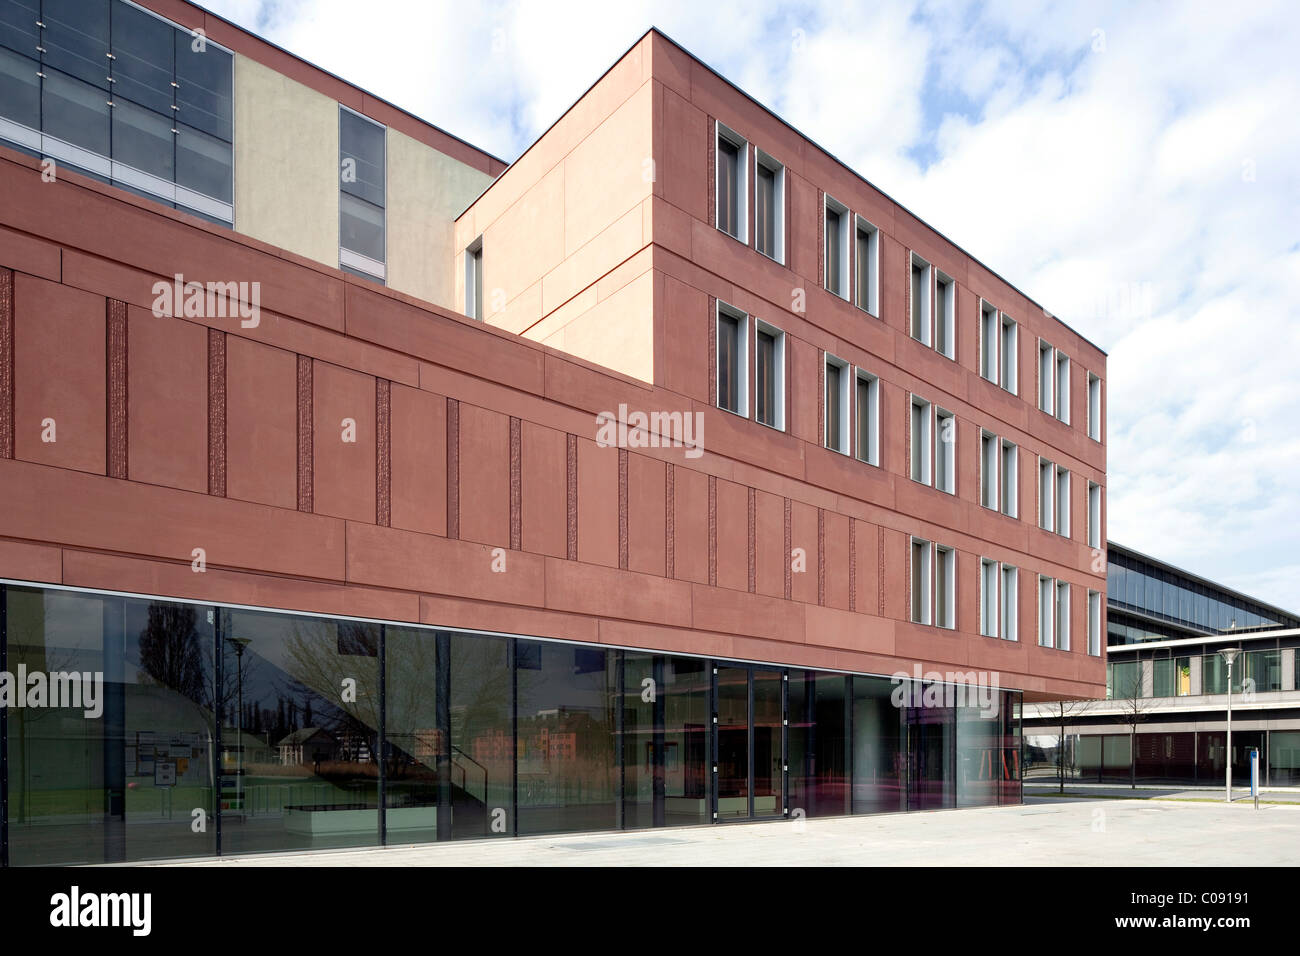 Walther-Nernst-Haus edificio, Istituti di chimica e fisica, Humboldt-Universitaet university, Wissenschaftsstadt Foto Stock